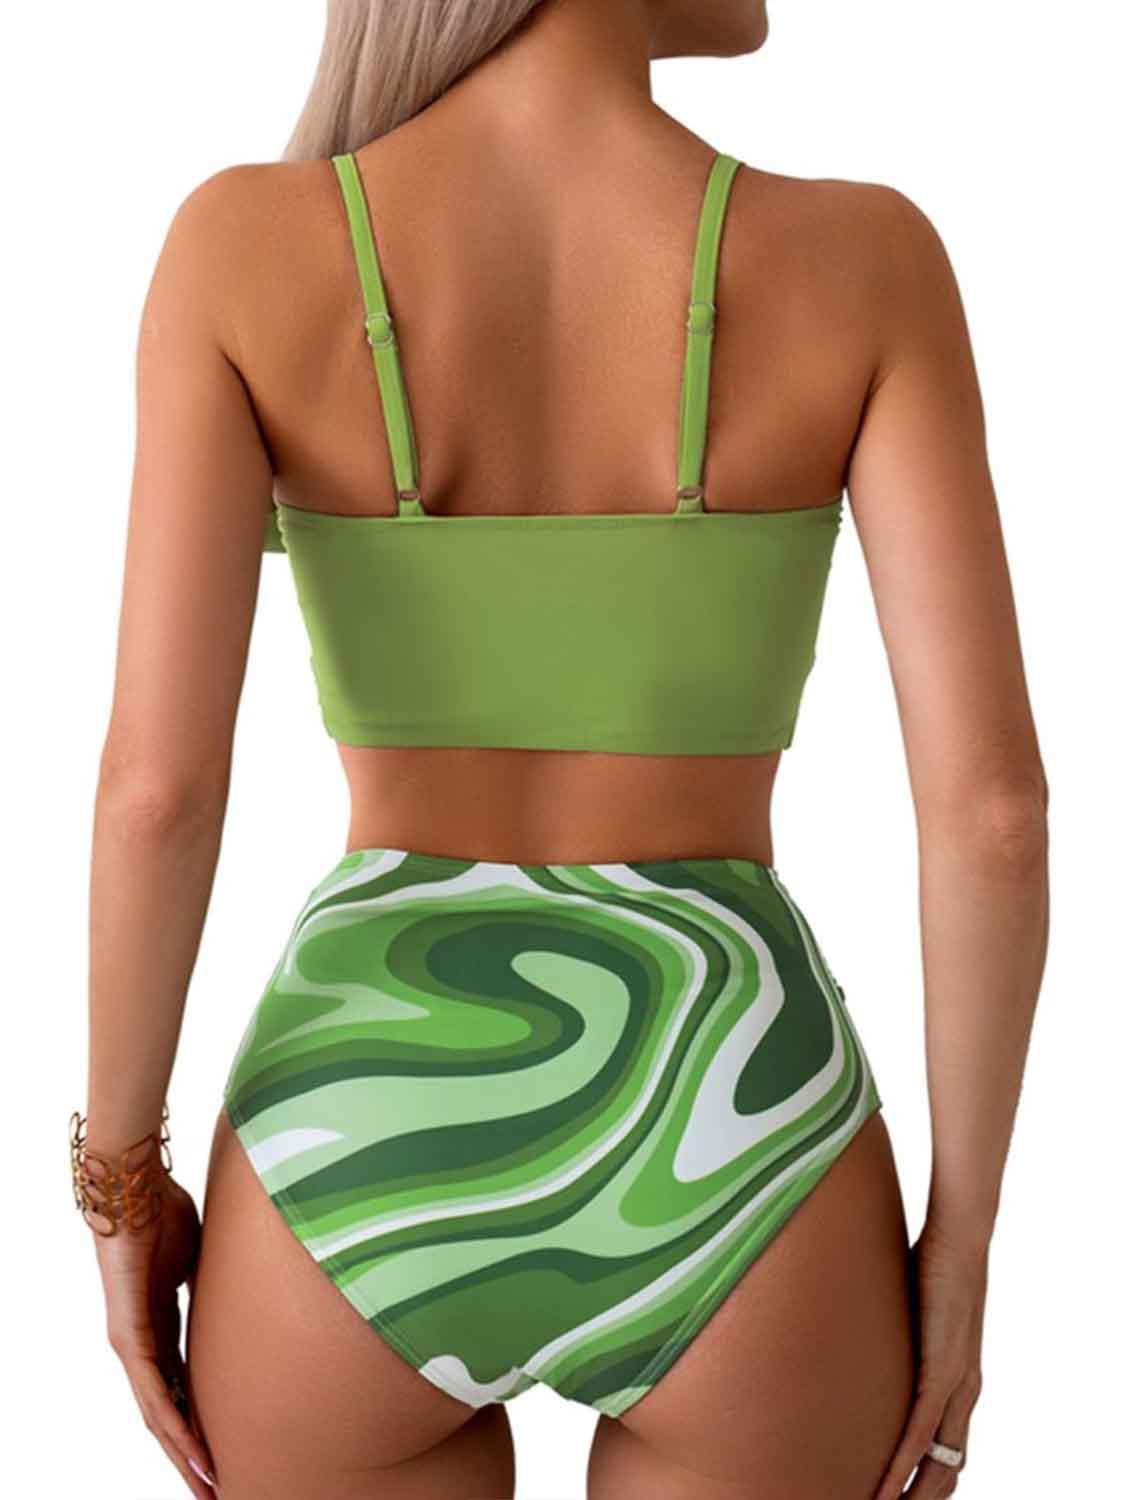 a woman wearing a green bikini top with a high waist